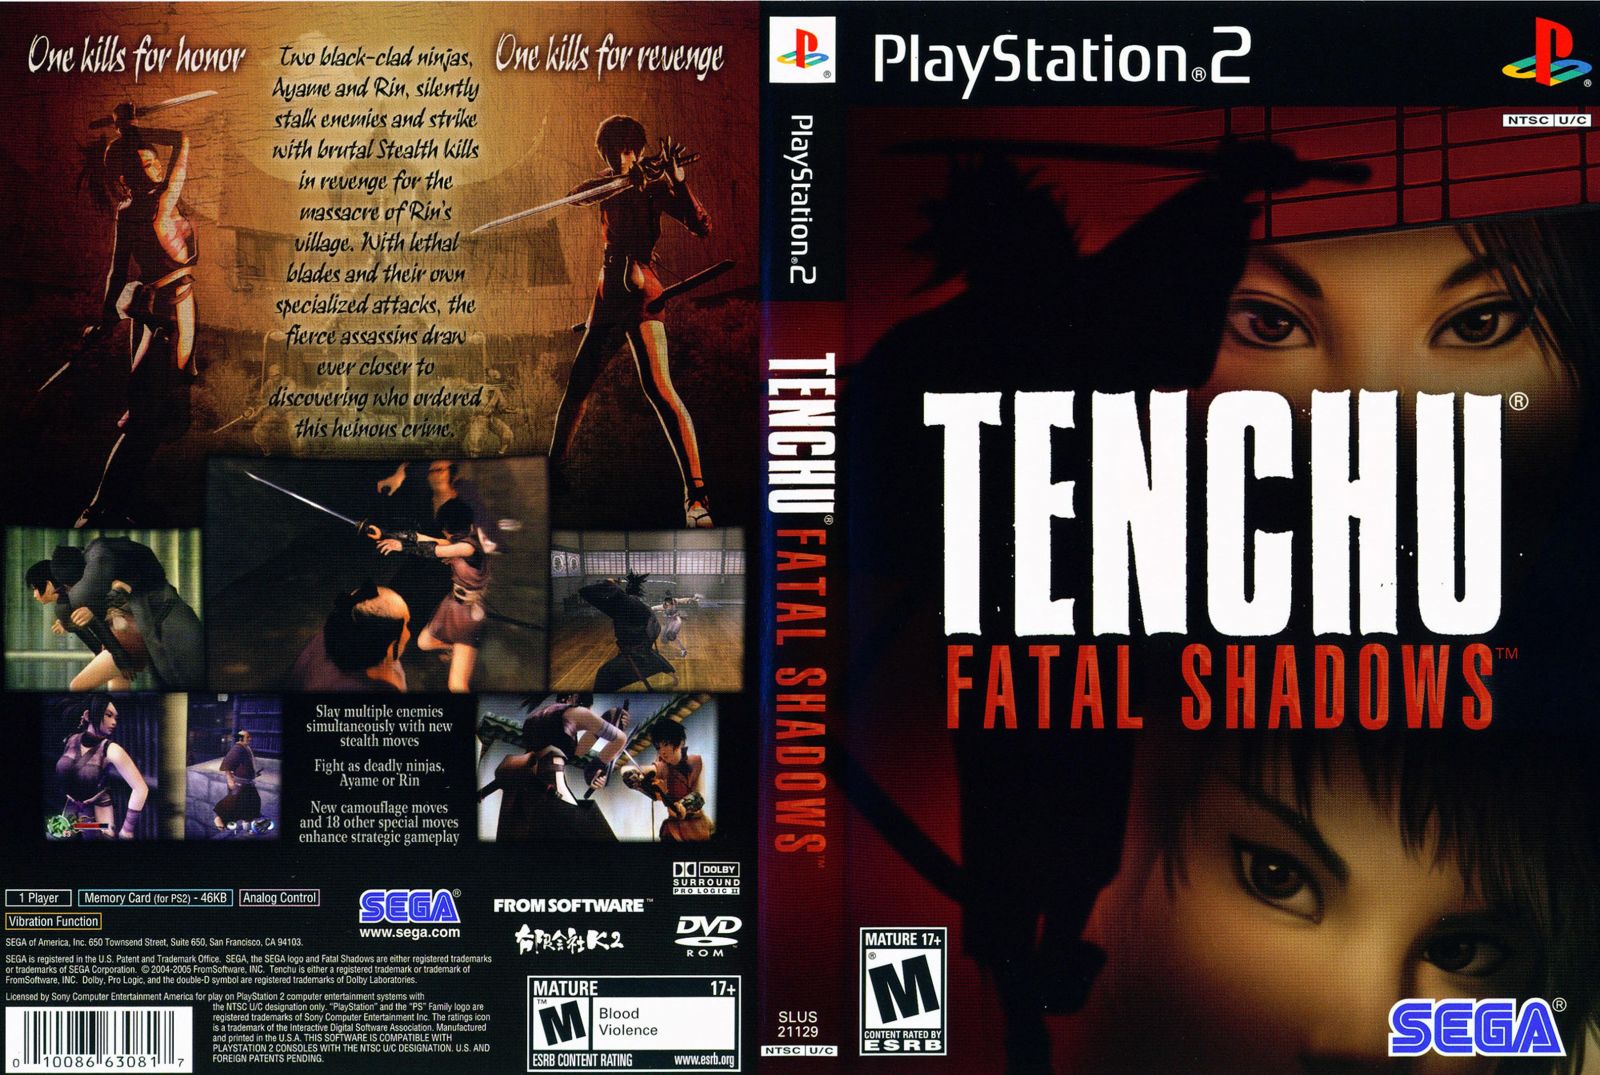 Tenchu (4) Fatal Shadows cover